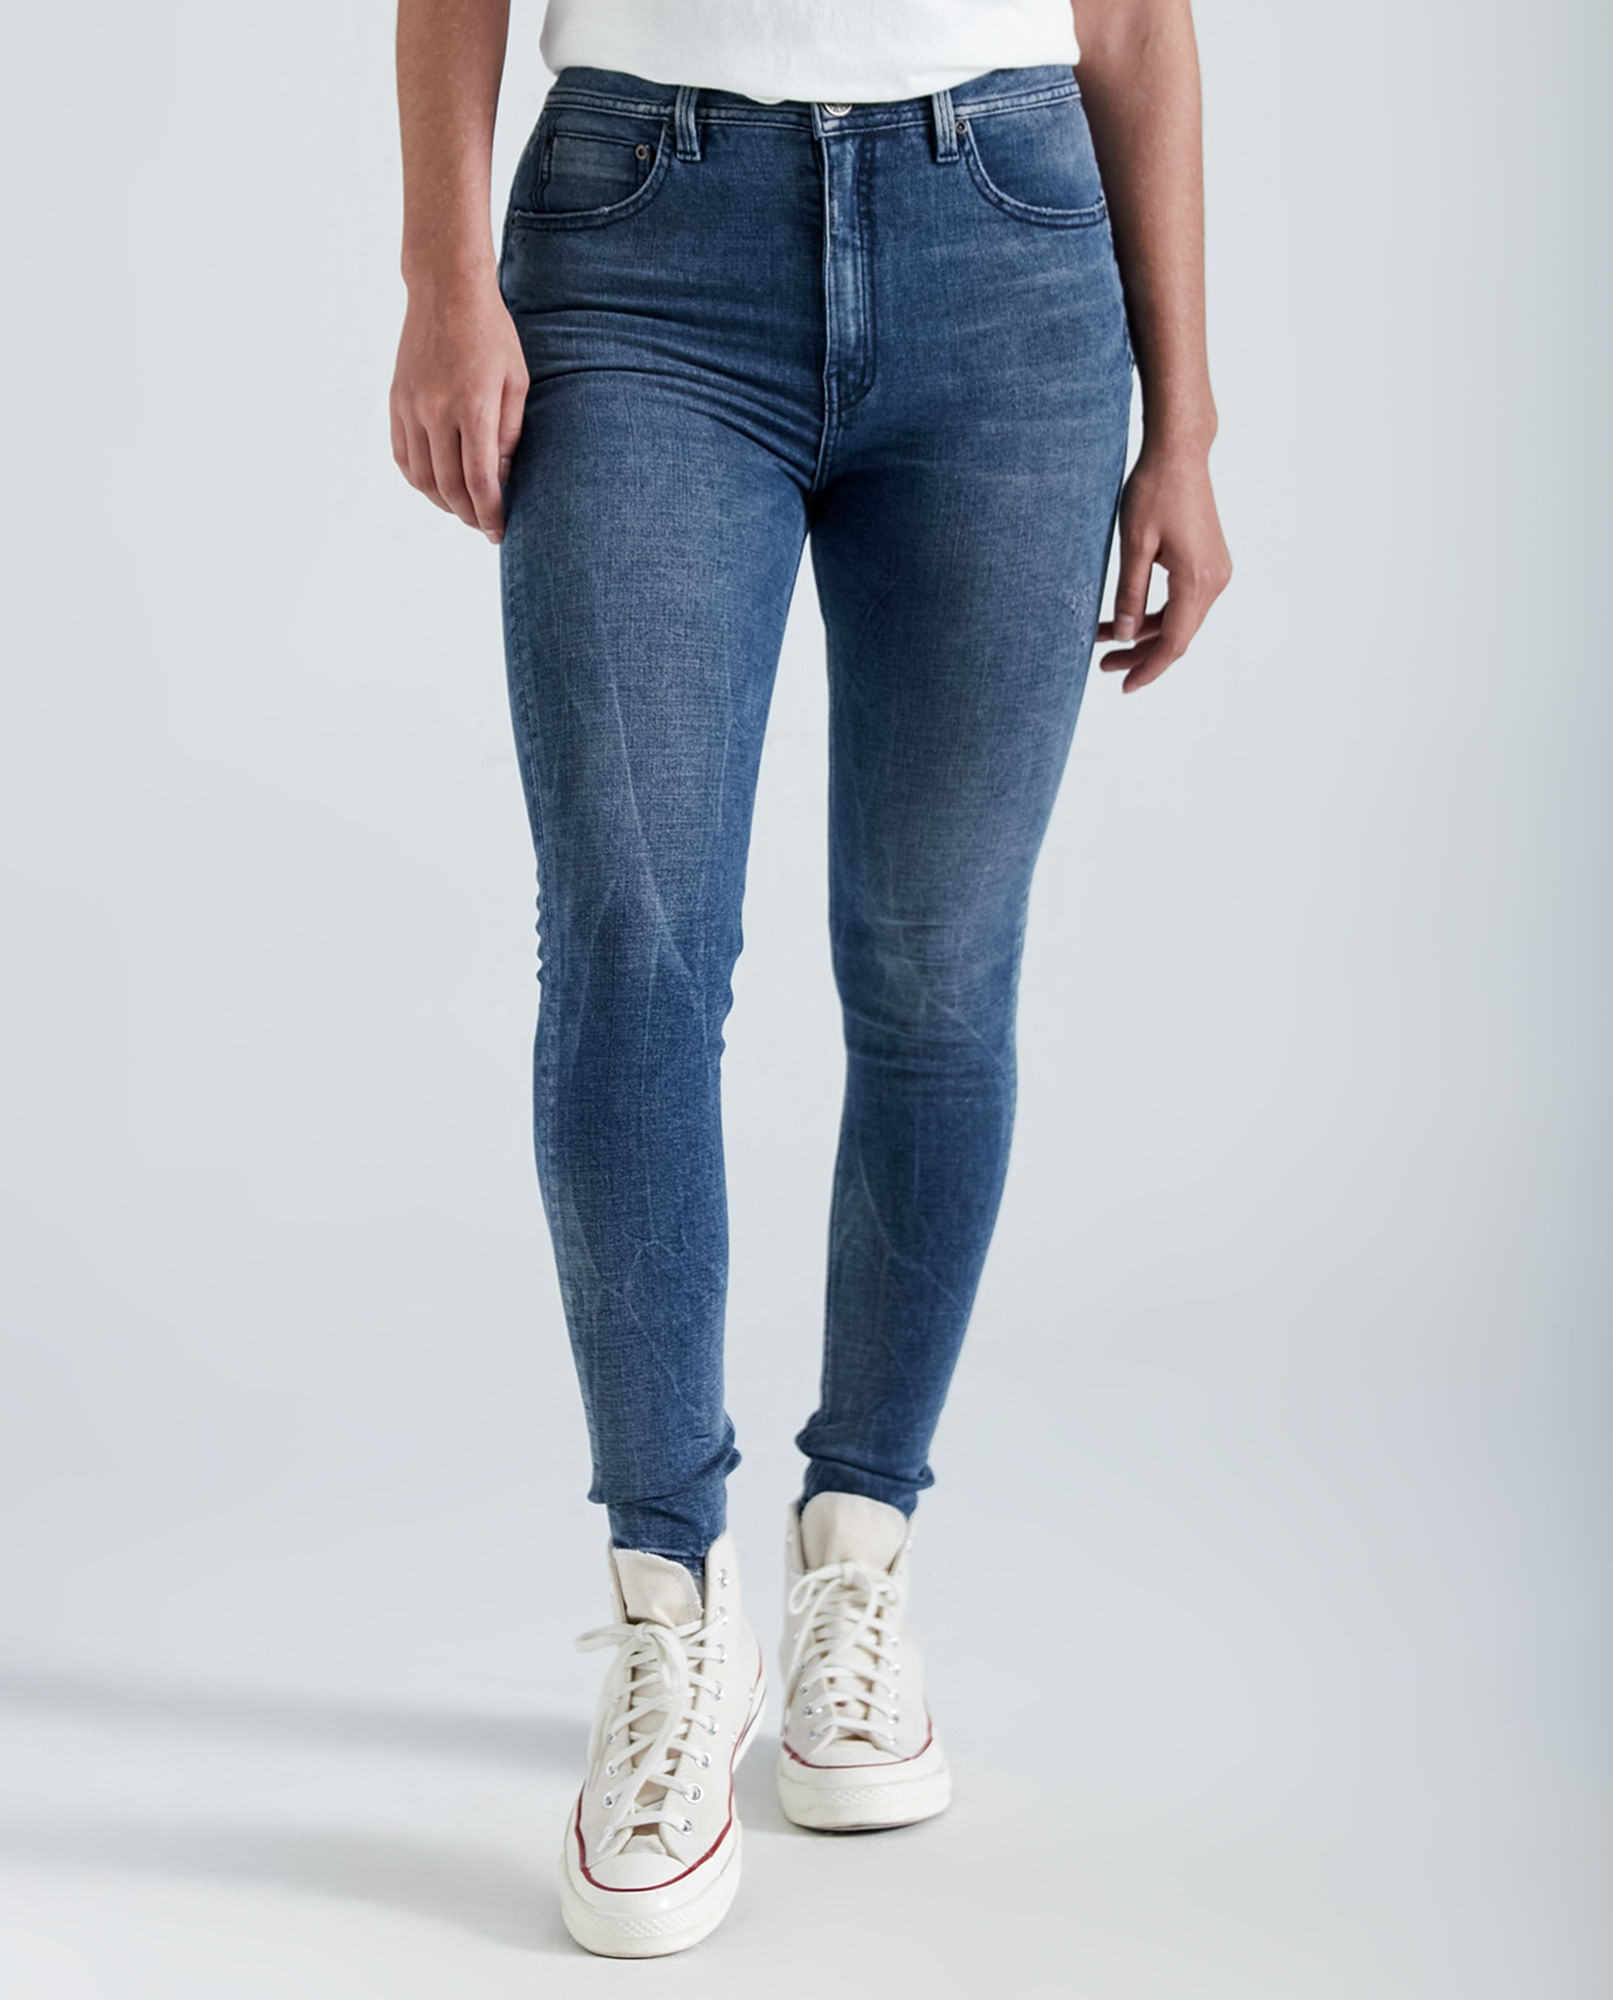 Jeans Mujer Corte Skinny 1364